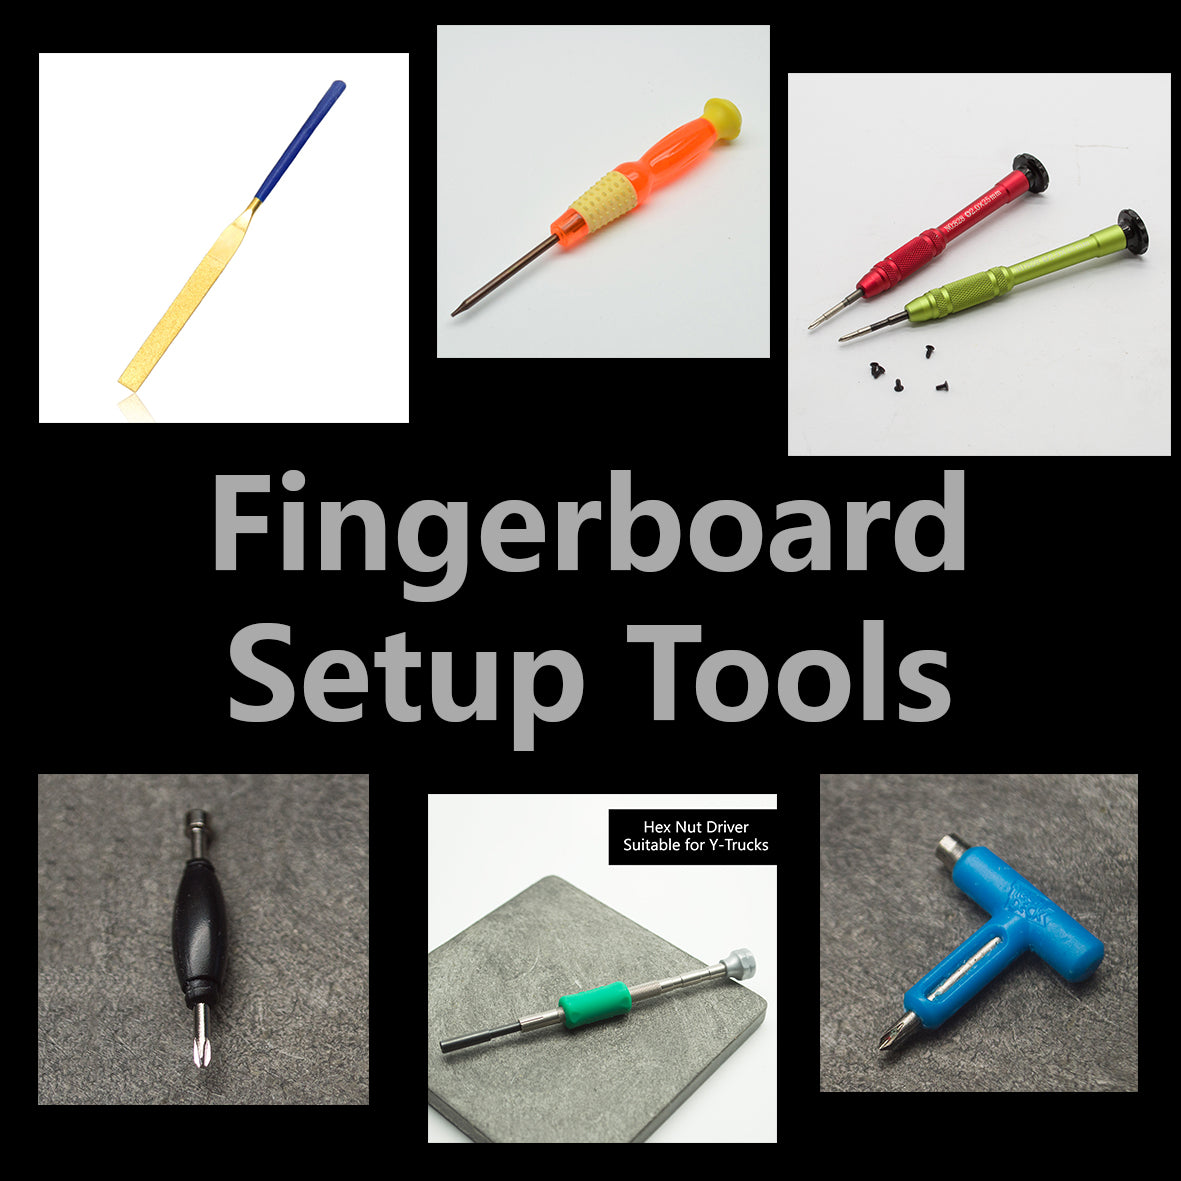 Fingerboard Setup Tools